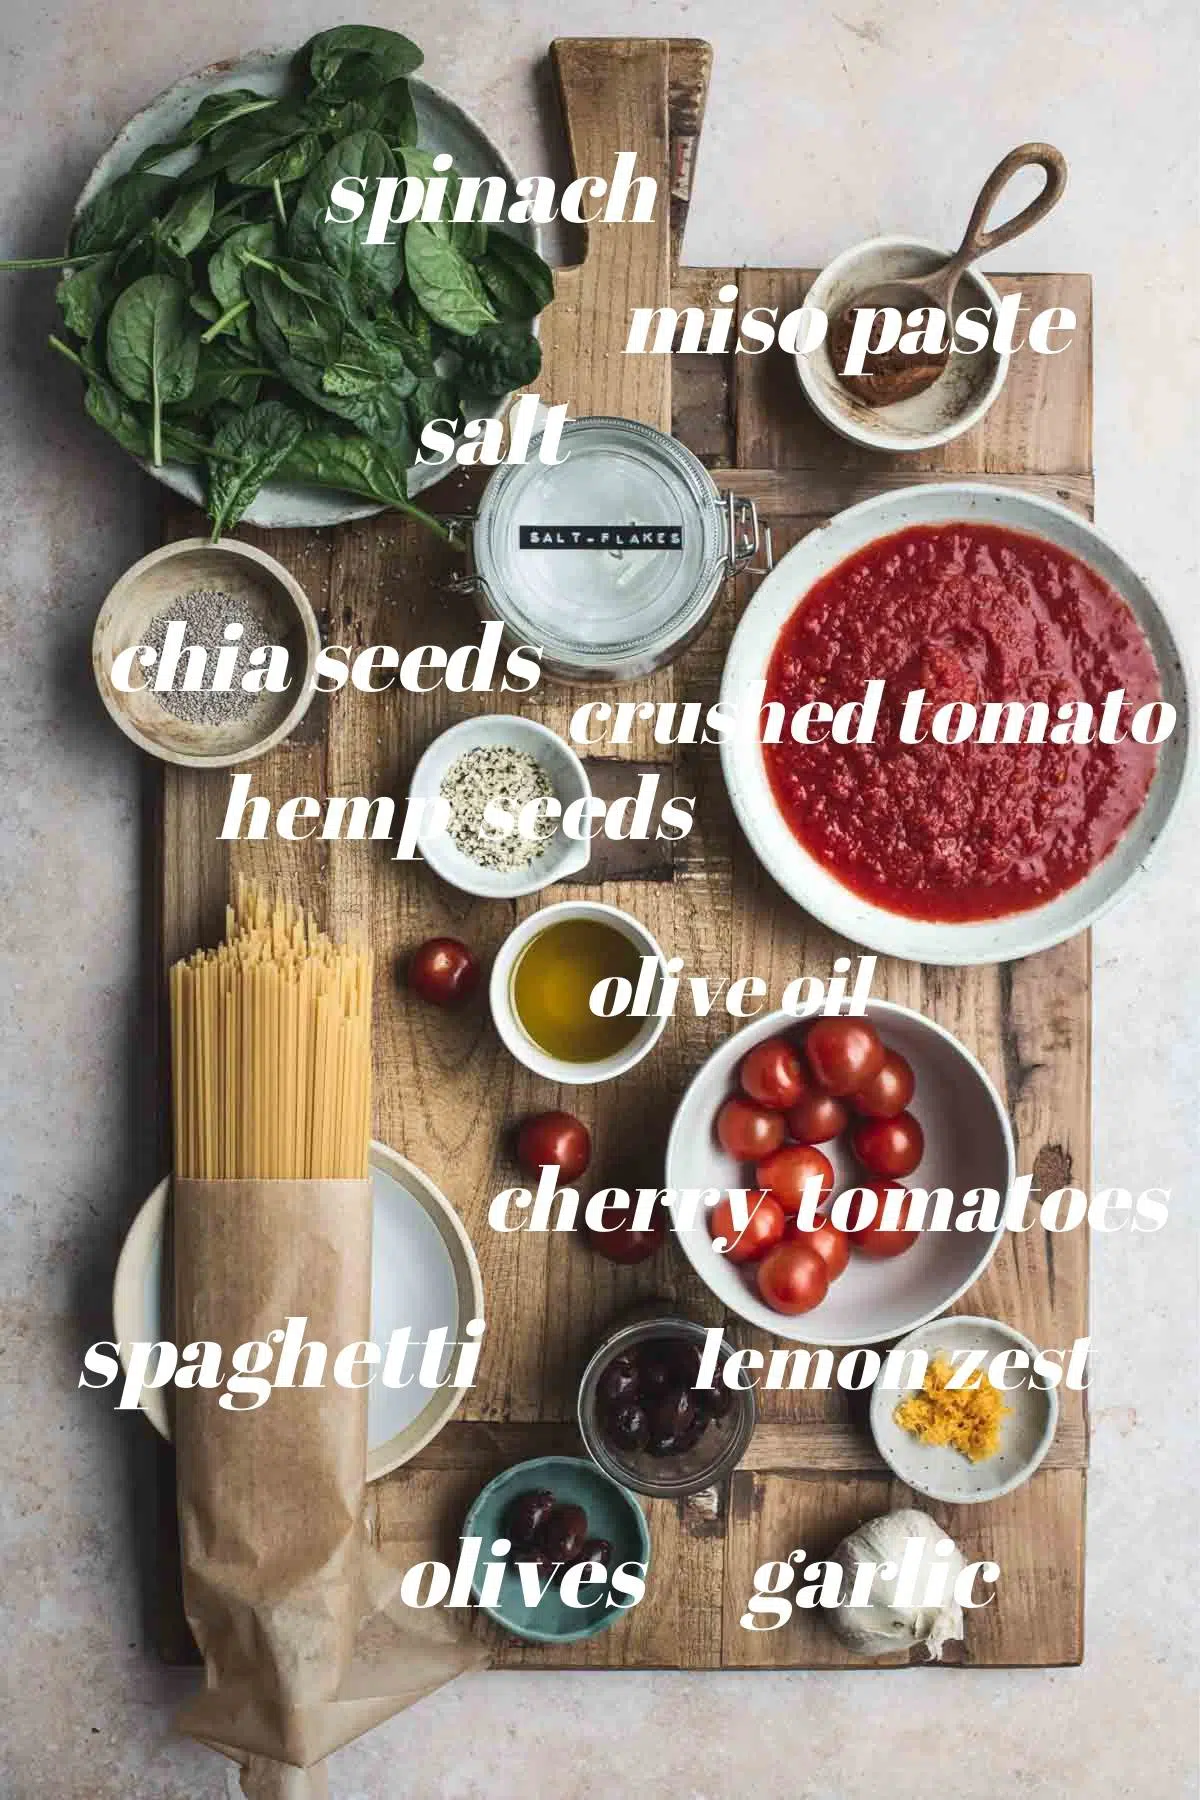 Tomato spaghetti ingredients on a board. 